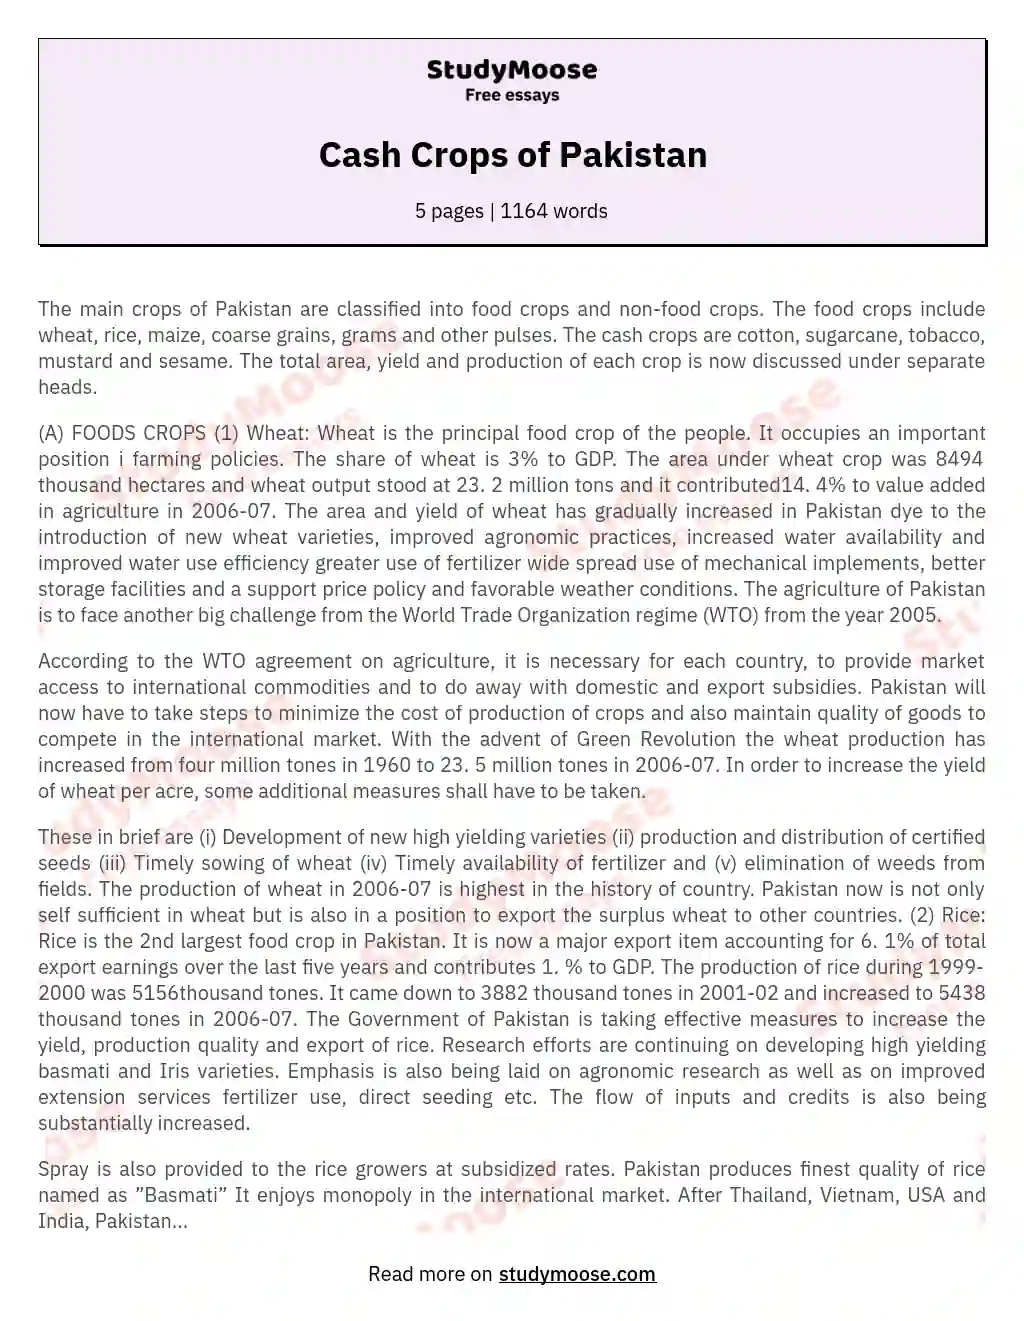 Cash Crops of Pakistan essay